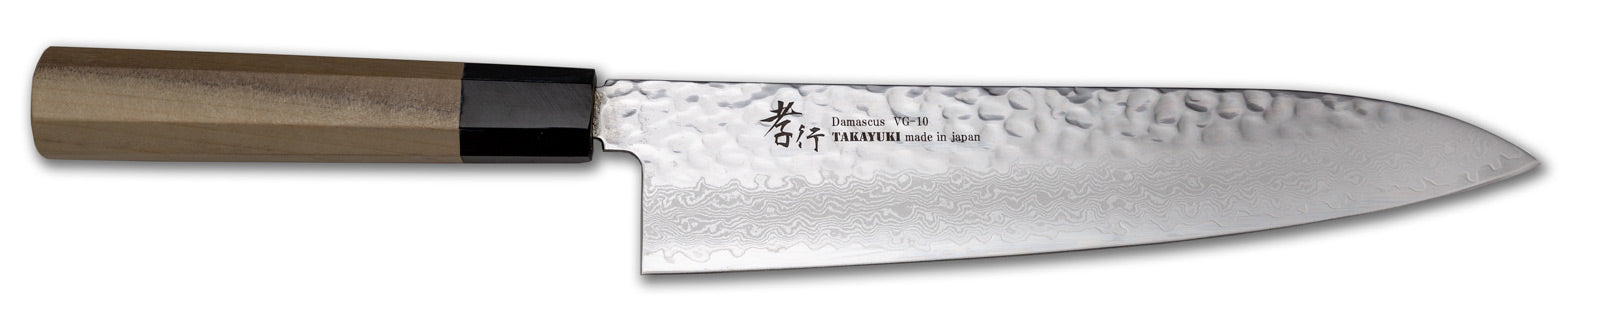 Sakai Takayuki Couteau de chef Damas 33 couches, 240 mm / 9,5", manche en bois de magnolia